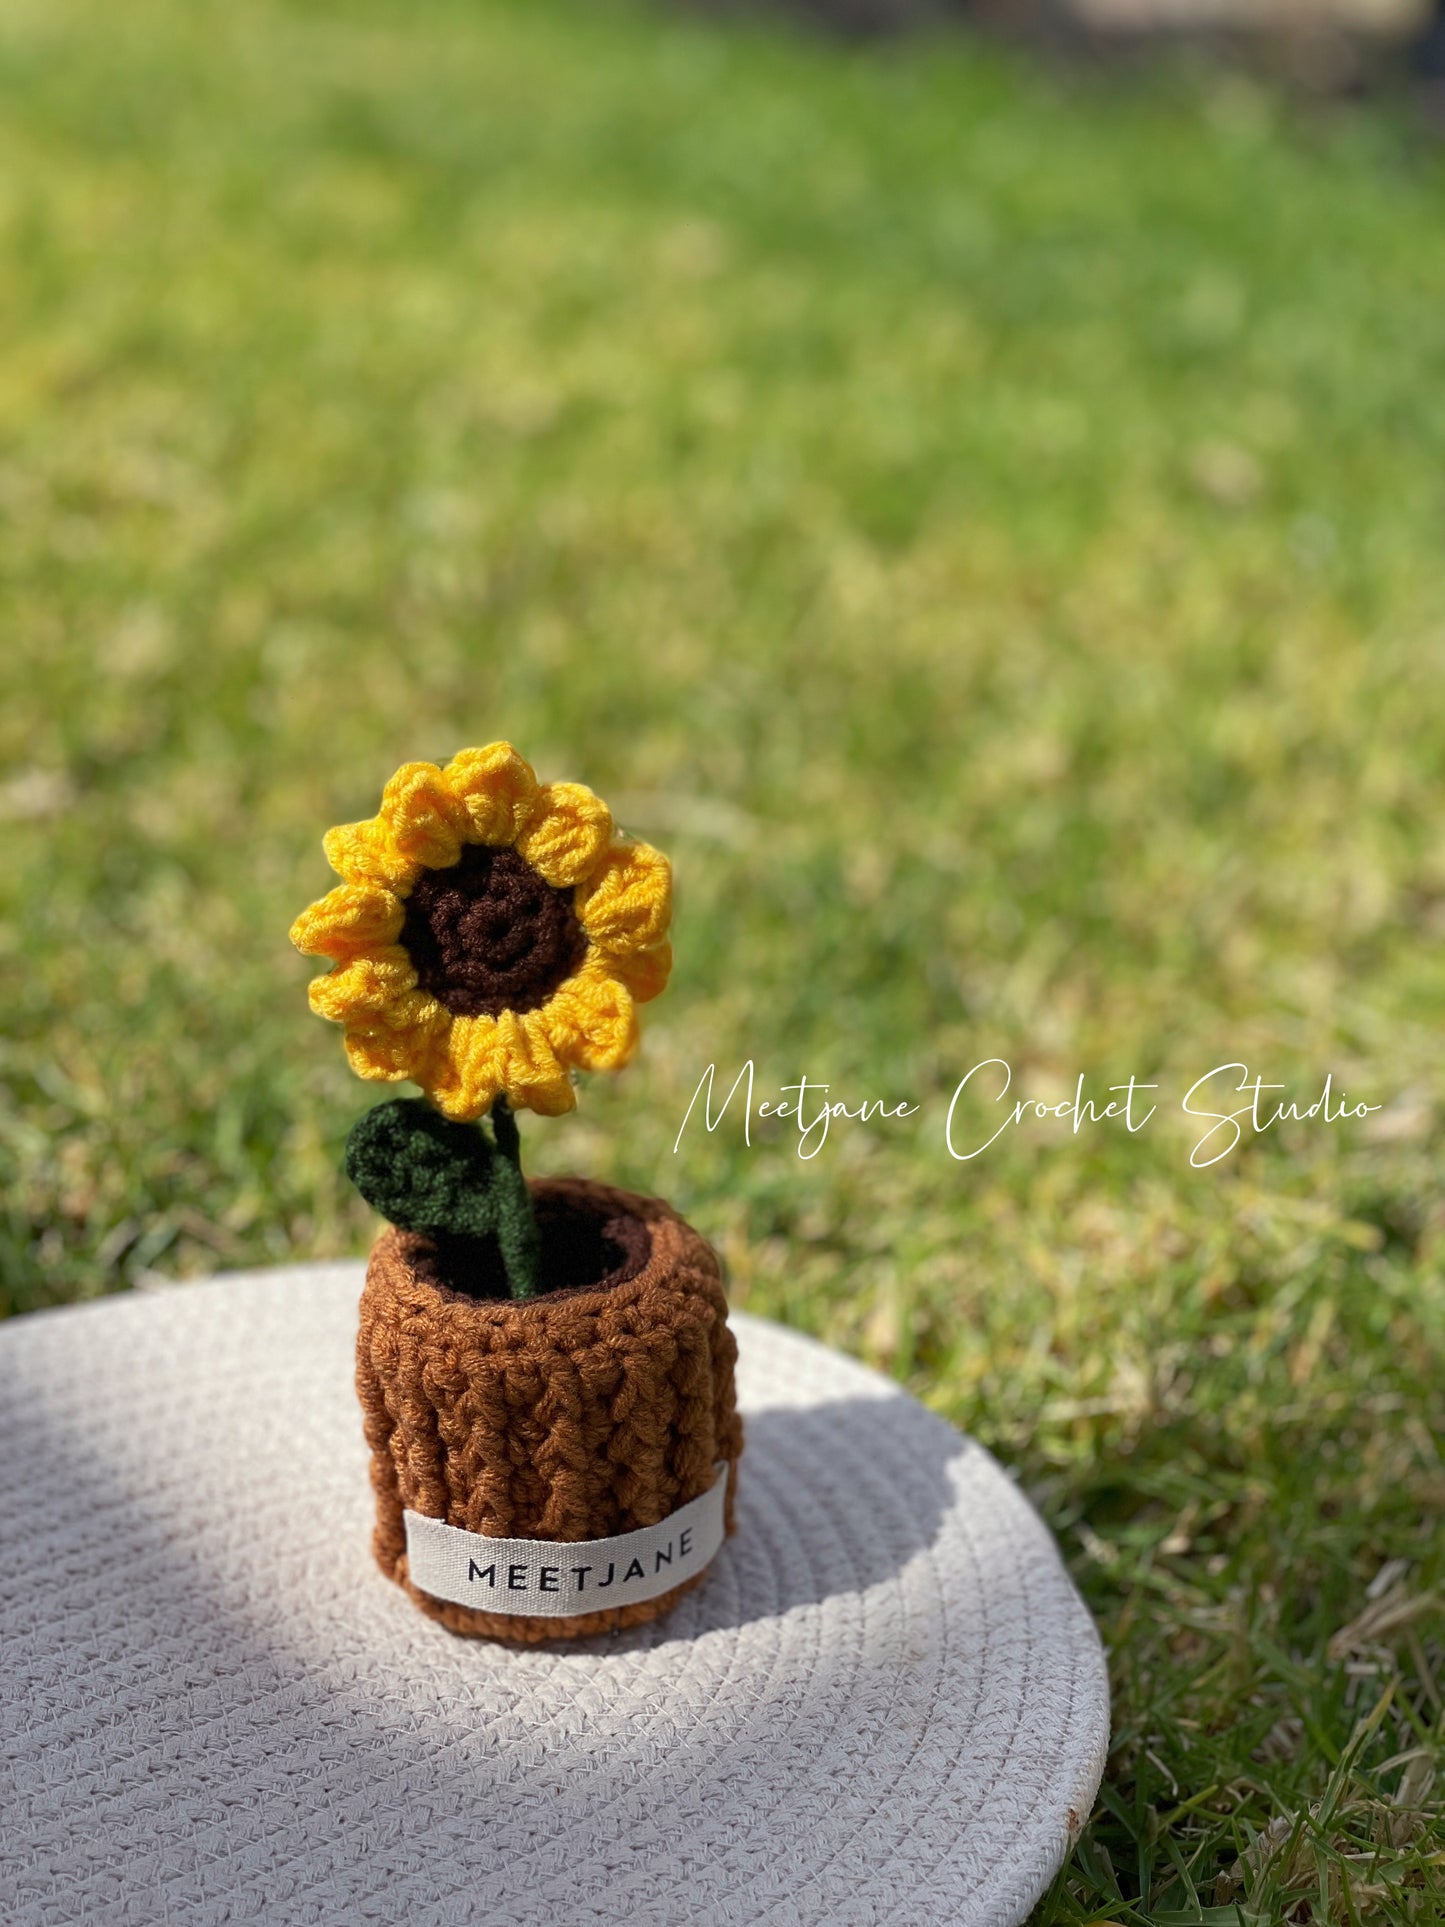 Meetjane bouquet| Melbourne handmade |Potted flowers|SUNFLOWER